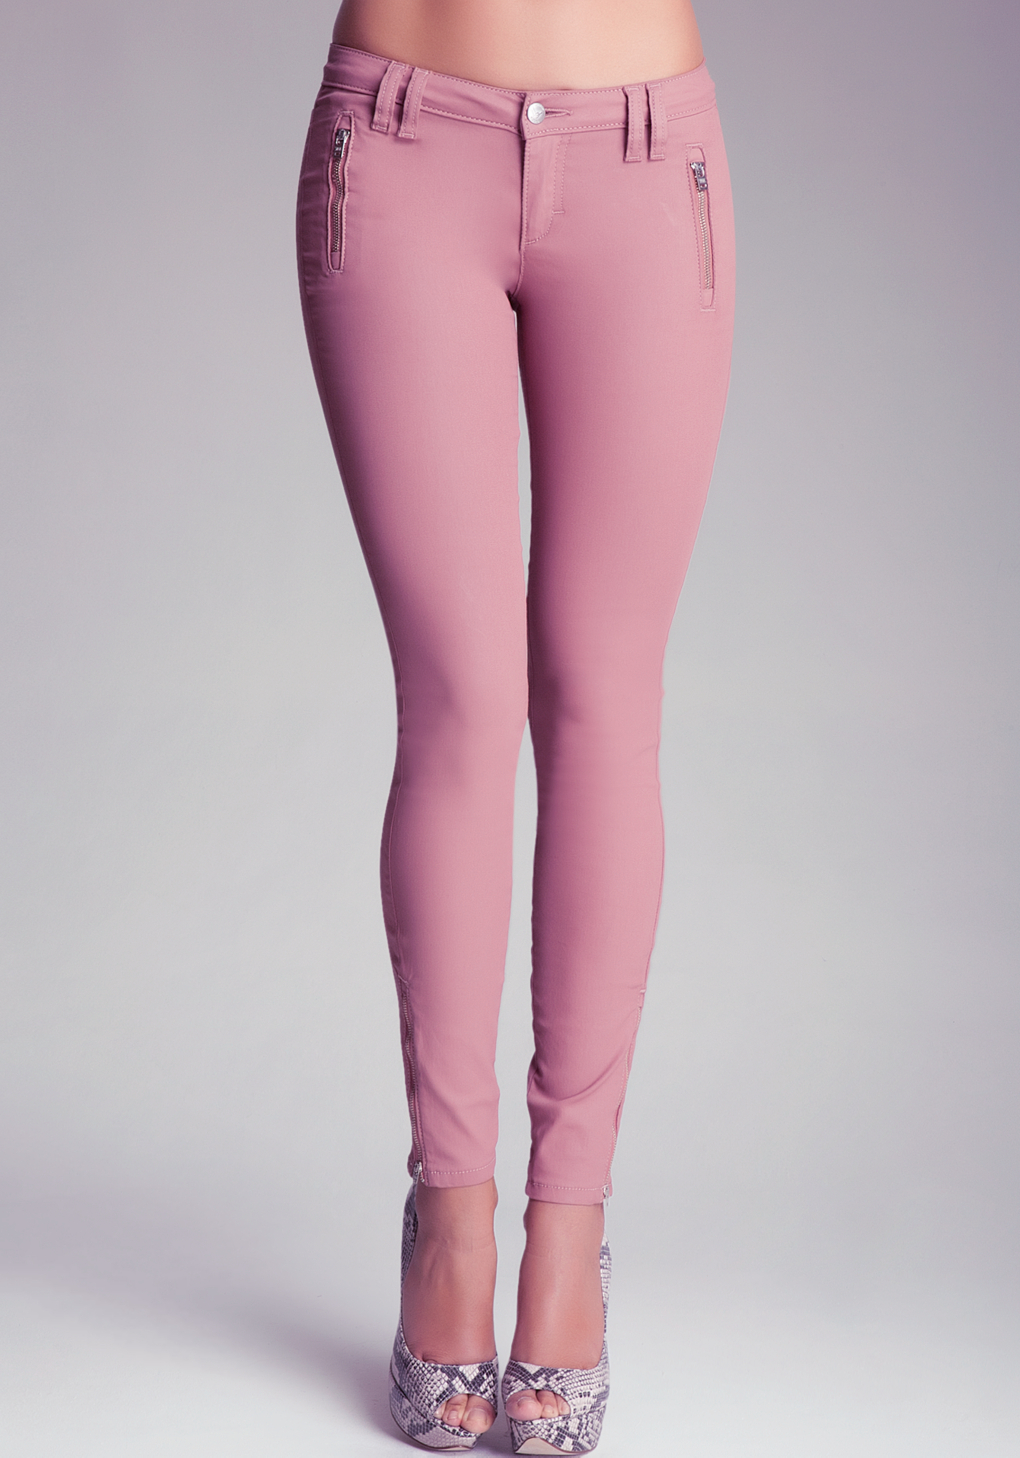 Bebe Coated Zipper Skinny Jeans in Rose (Pink) - Lyst